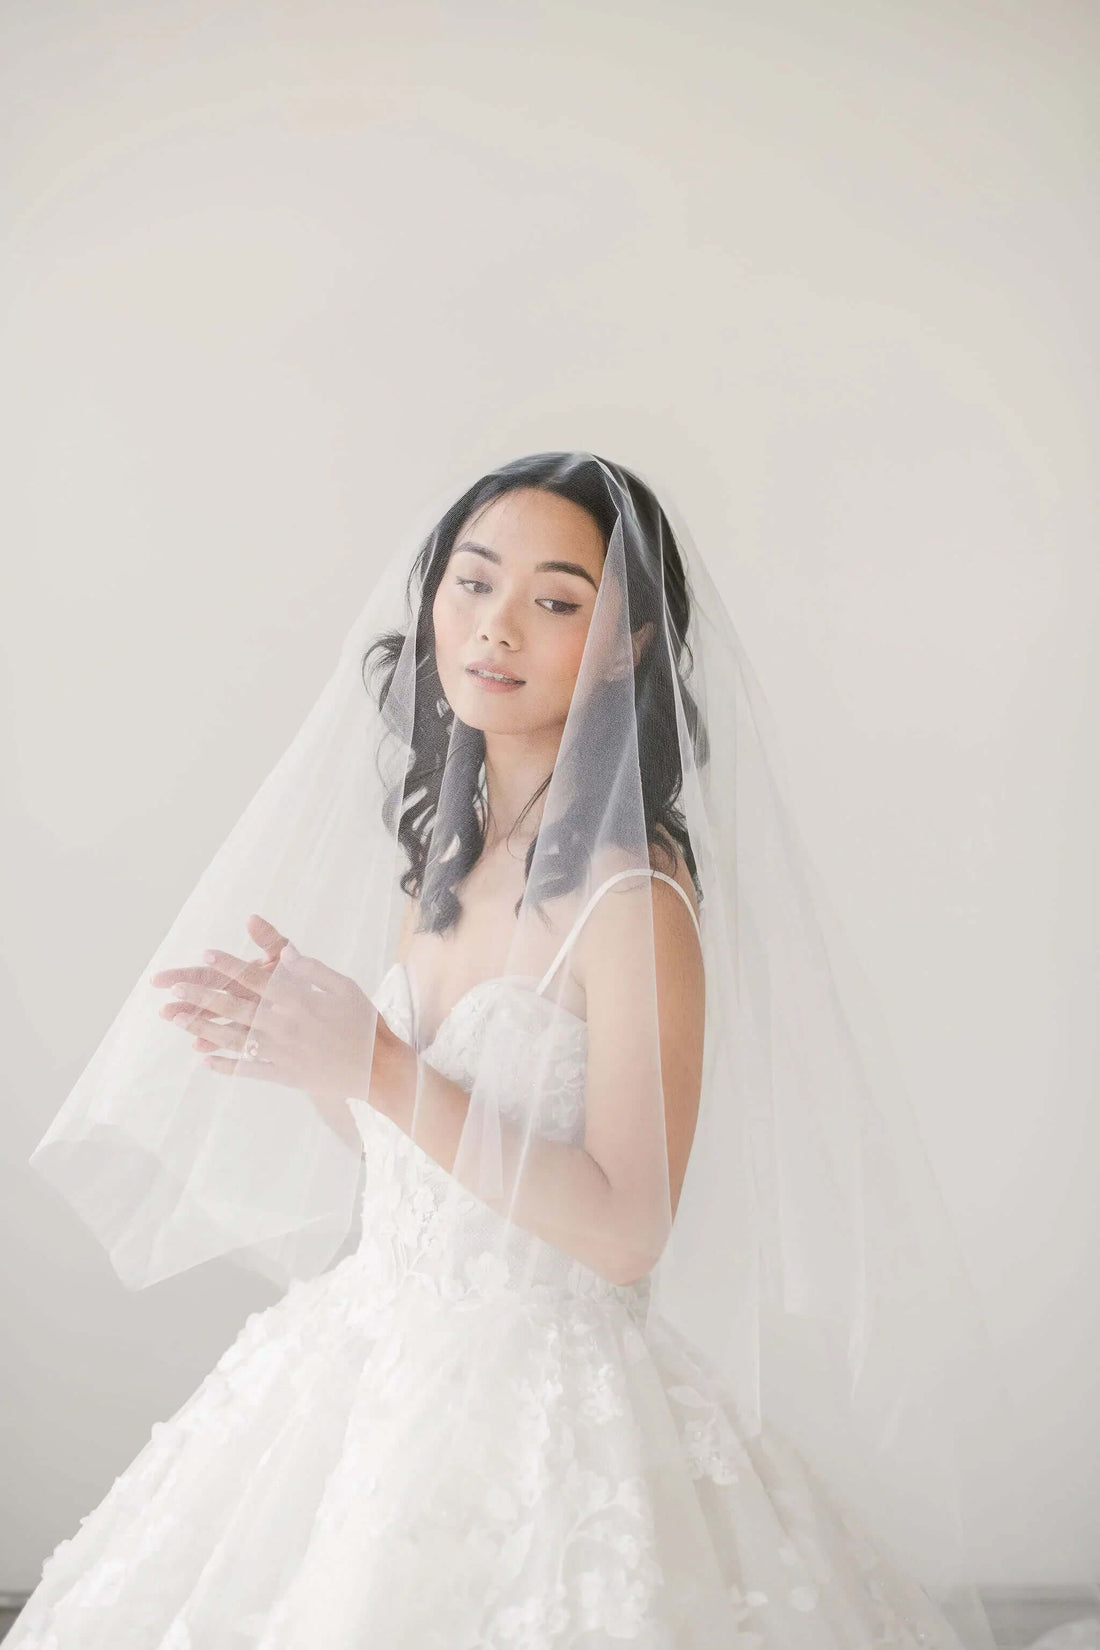 Featured product: Tulle Drop circle bridal veil Tessa Kim